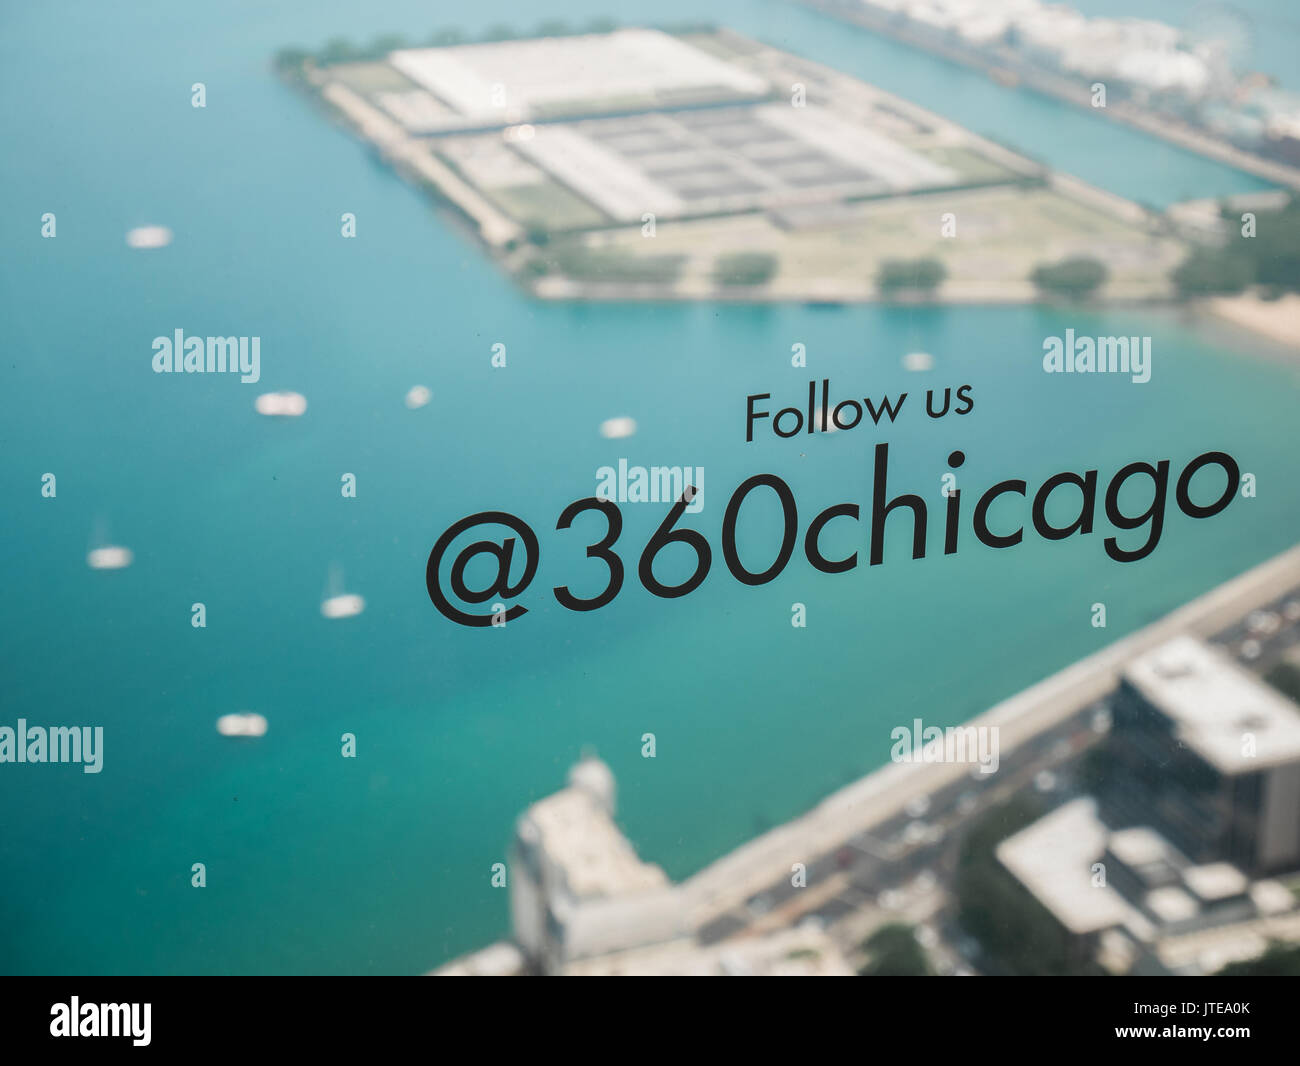 360 chicago twitter handle Stock Photo